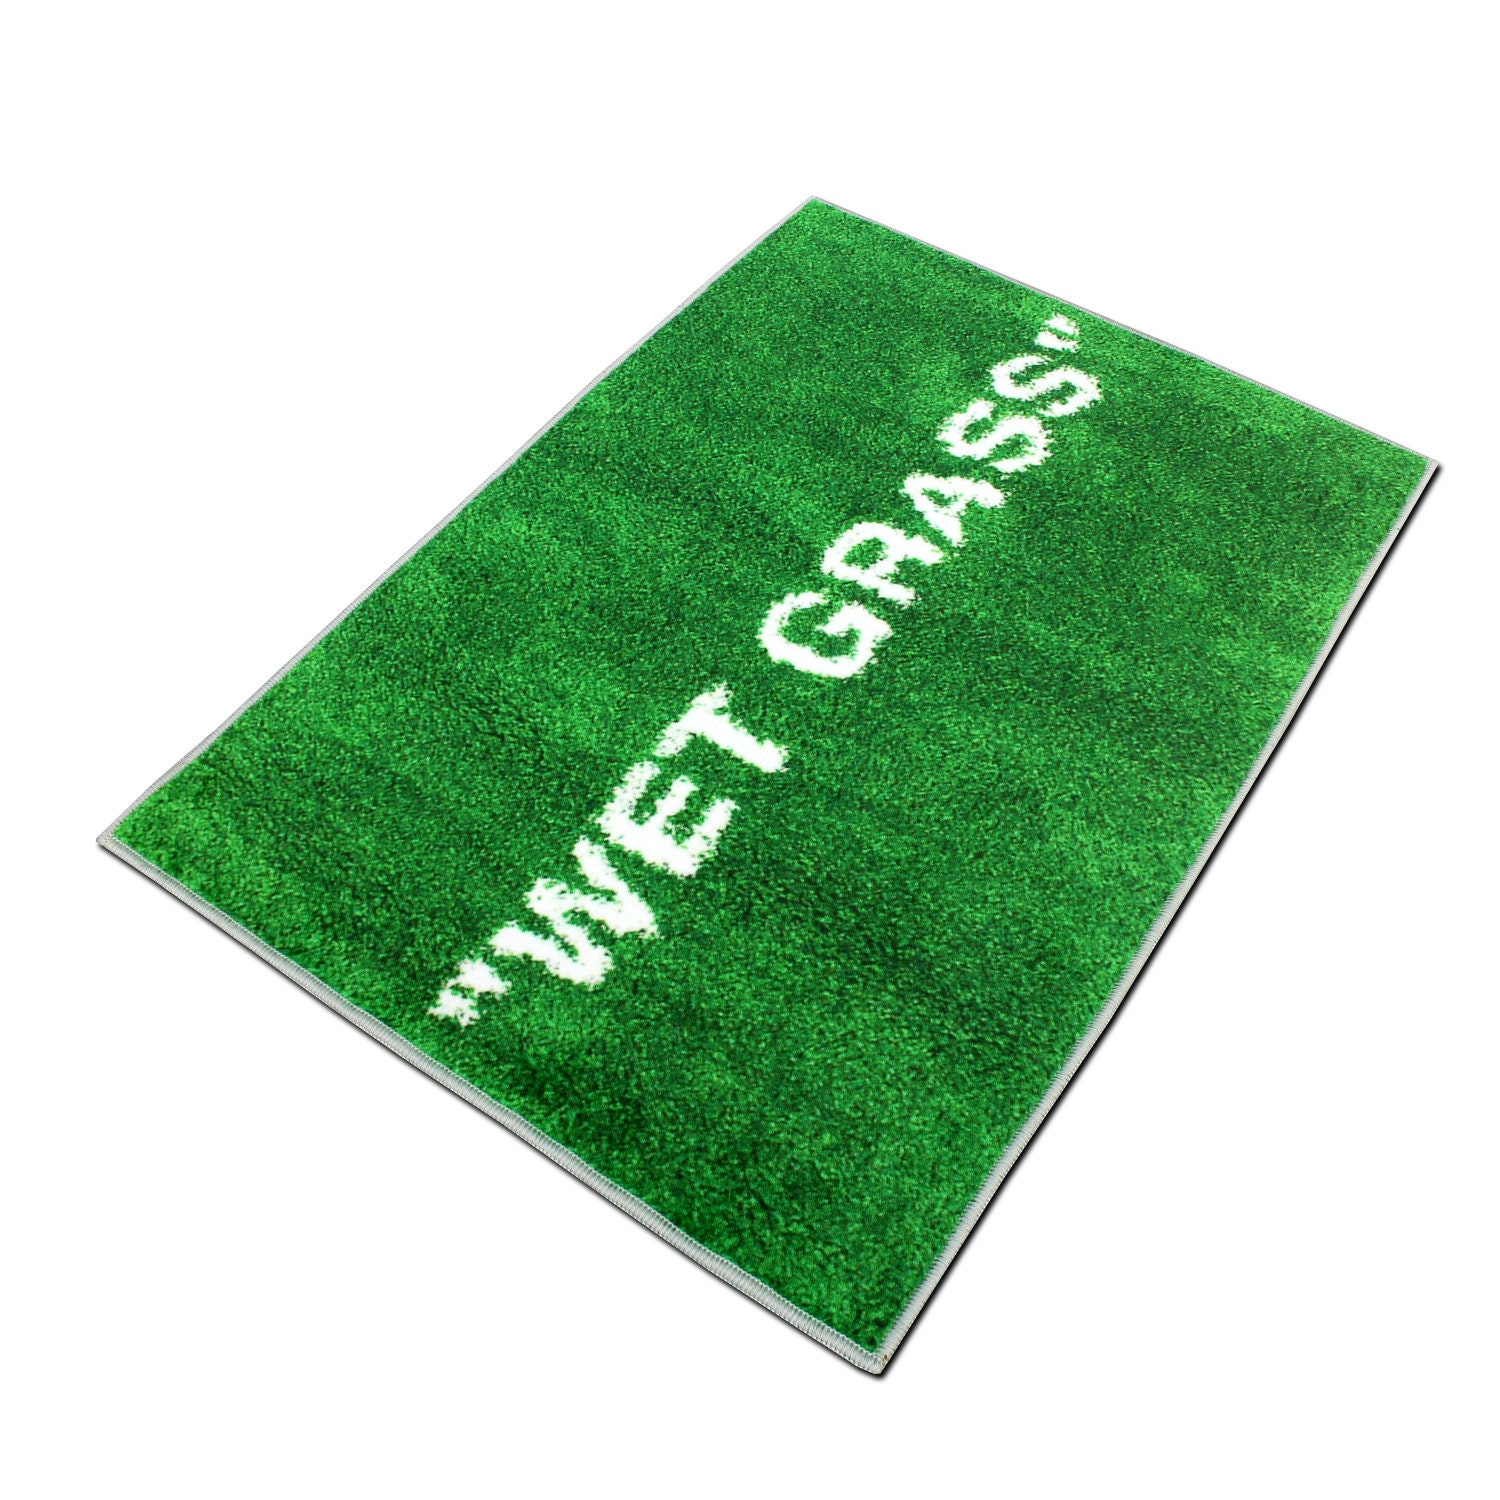  Wet Grass, Wet Grass Rug, Non Slip Rugs, Grass Rug, Wet Grass  Patterned Rugs, Wetgrass, for Living Room, Fashion Rug, Indoor Rug, Not  Plush e1000 (3.2x4.6 feet - 100x140 cm) 